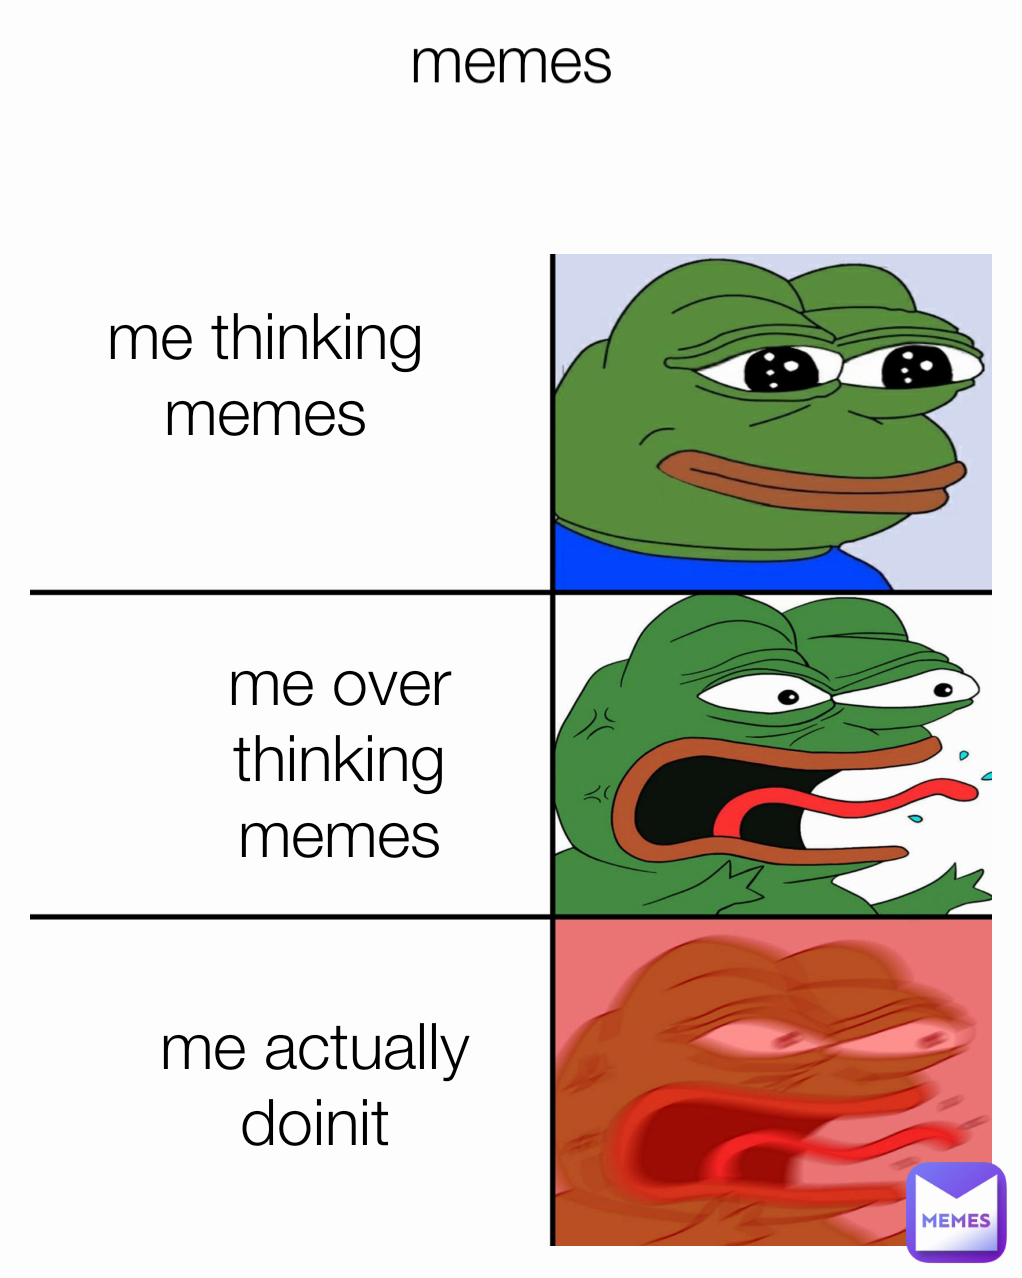 me thinking memes
 me over thinking memes
 memes

 me actually doinit
